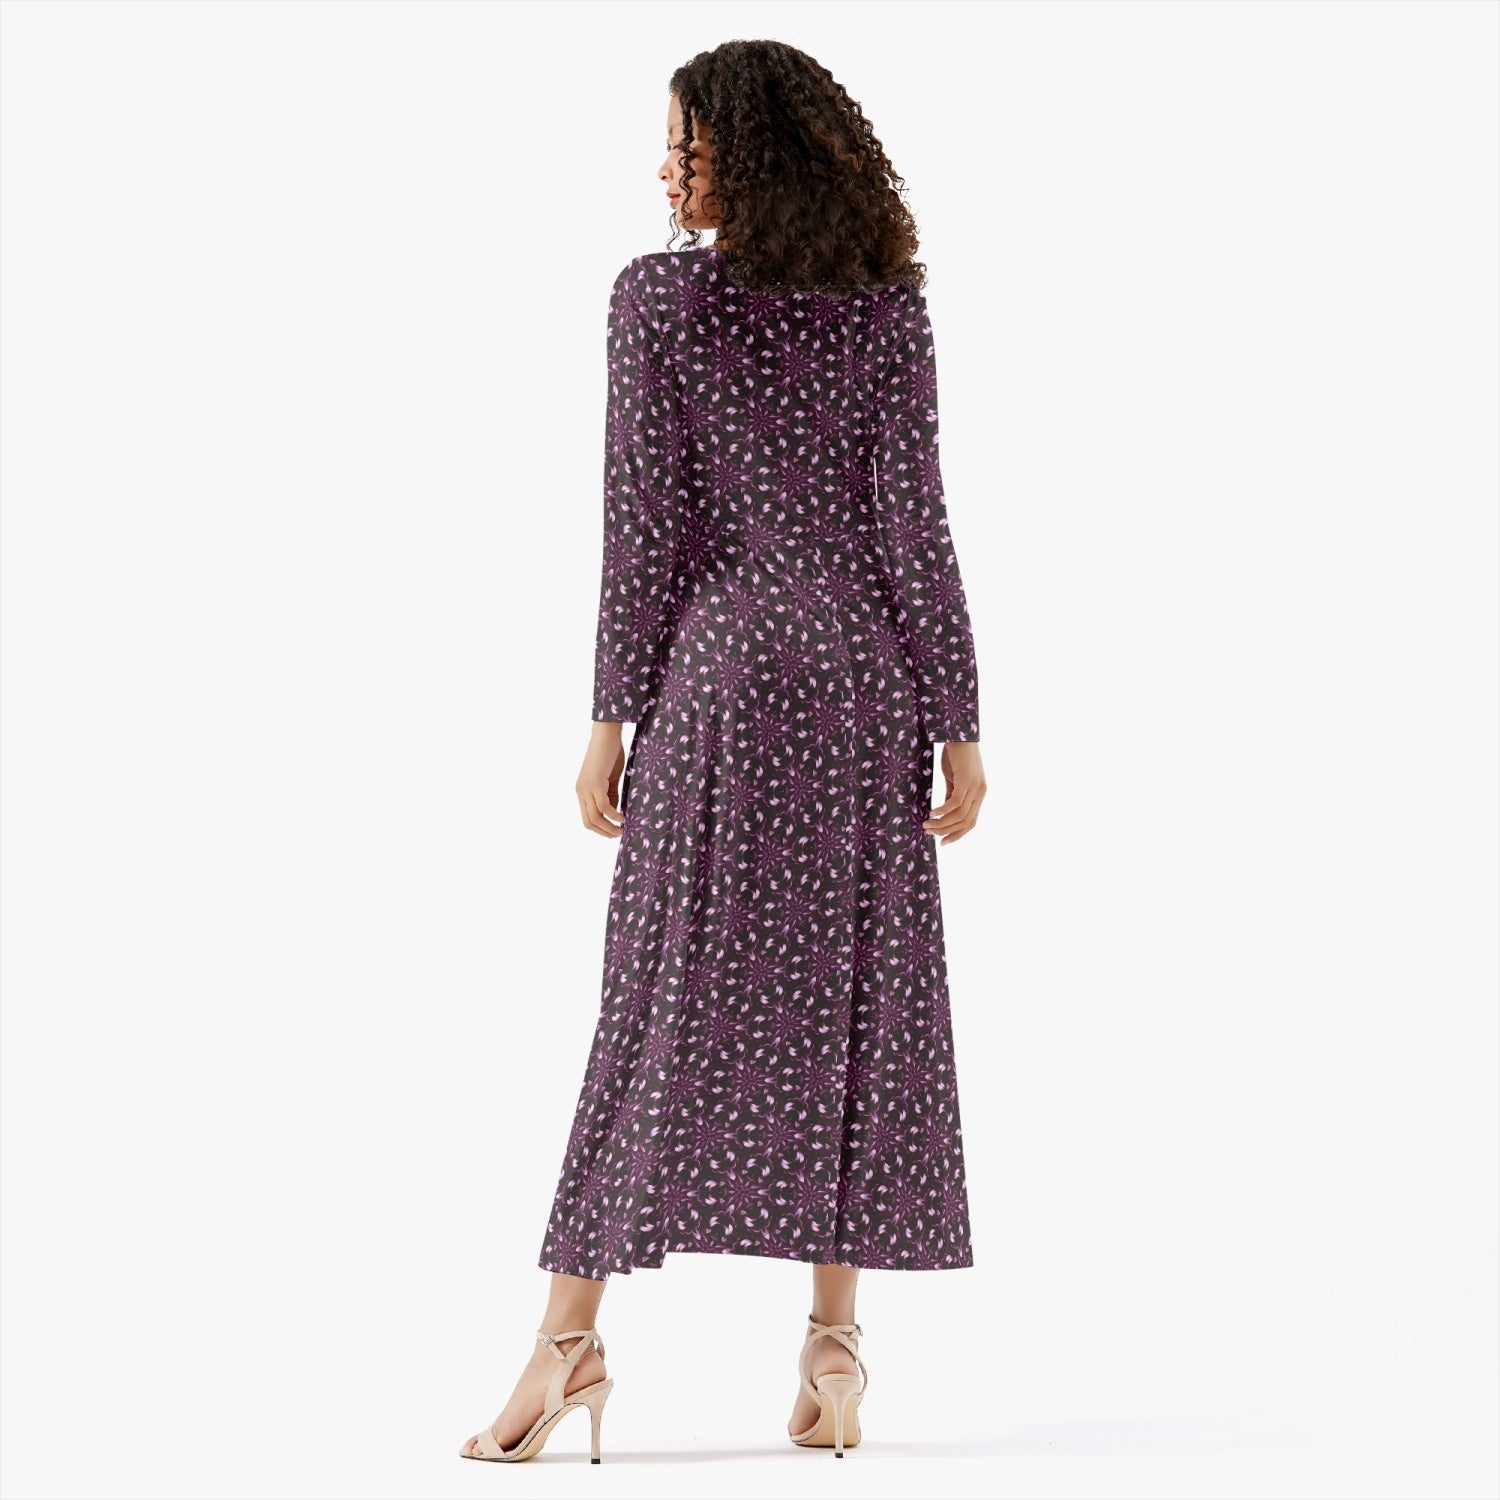 Deep Purple patterned Trendy autumn 2022 Women's Long-Sleeve One-piece Dress, by Sensus Studio Design